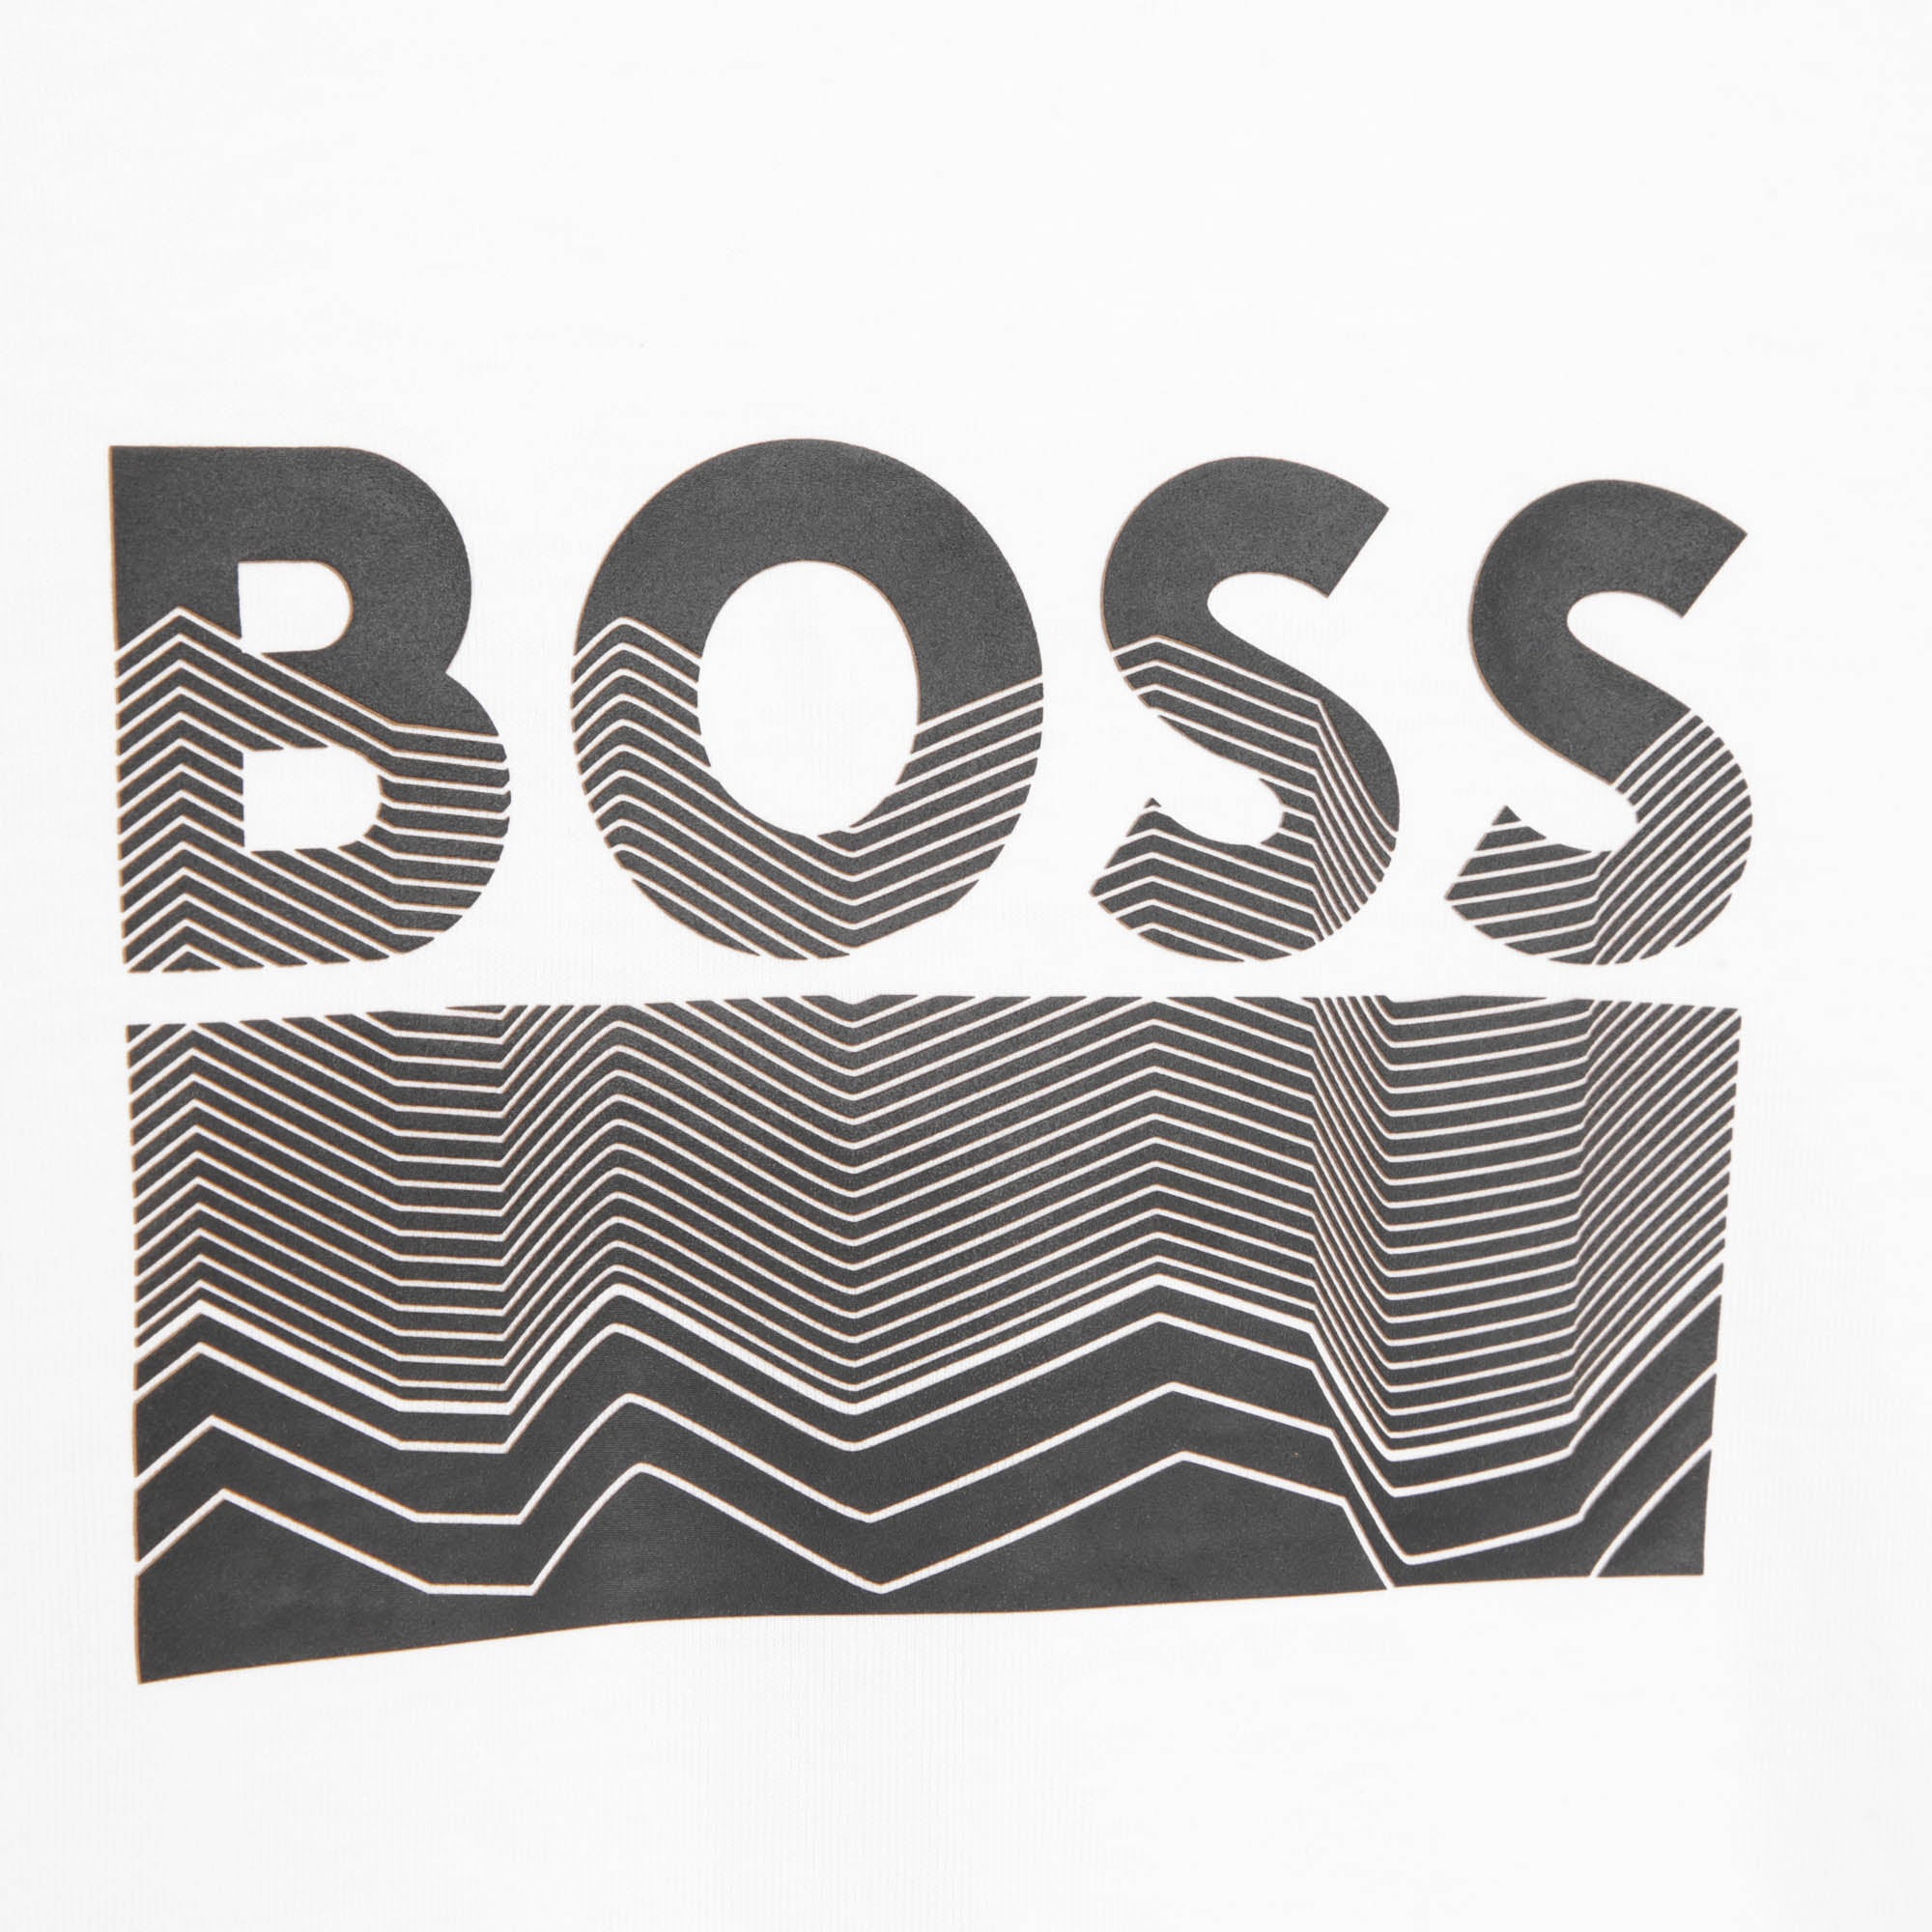 Hugo Boss Boys Logo T-shirt White 5Y